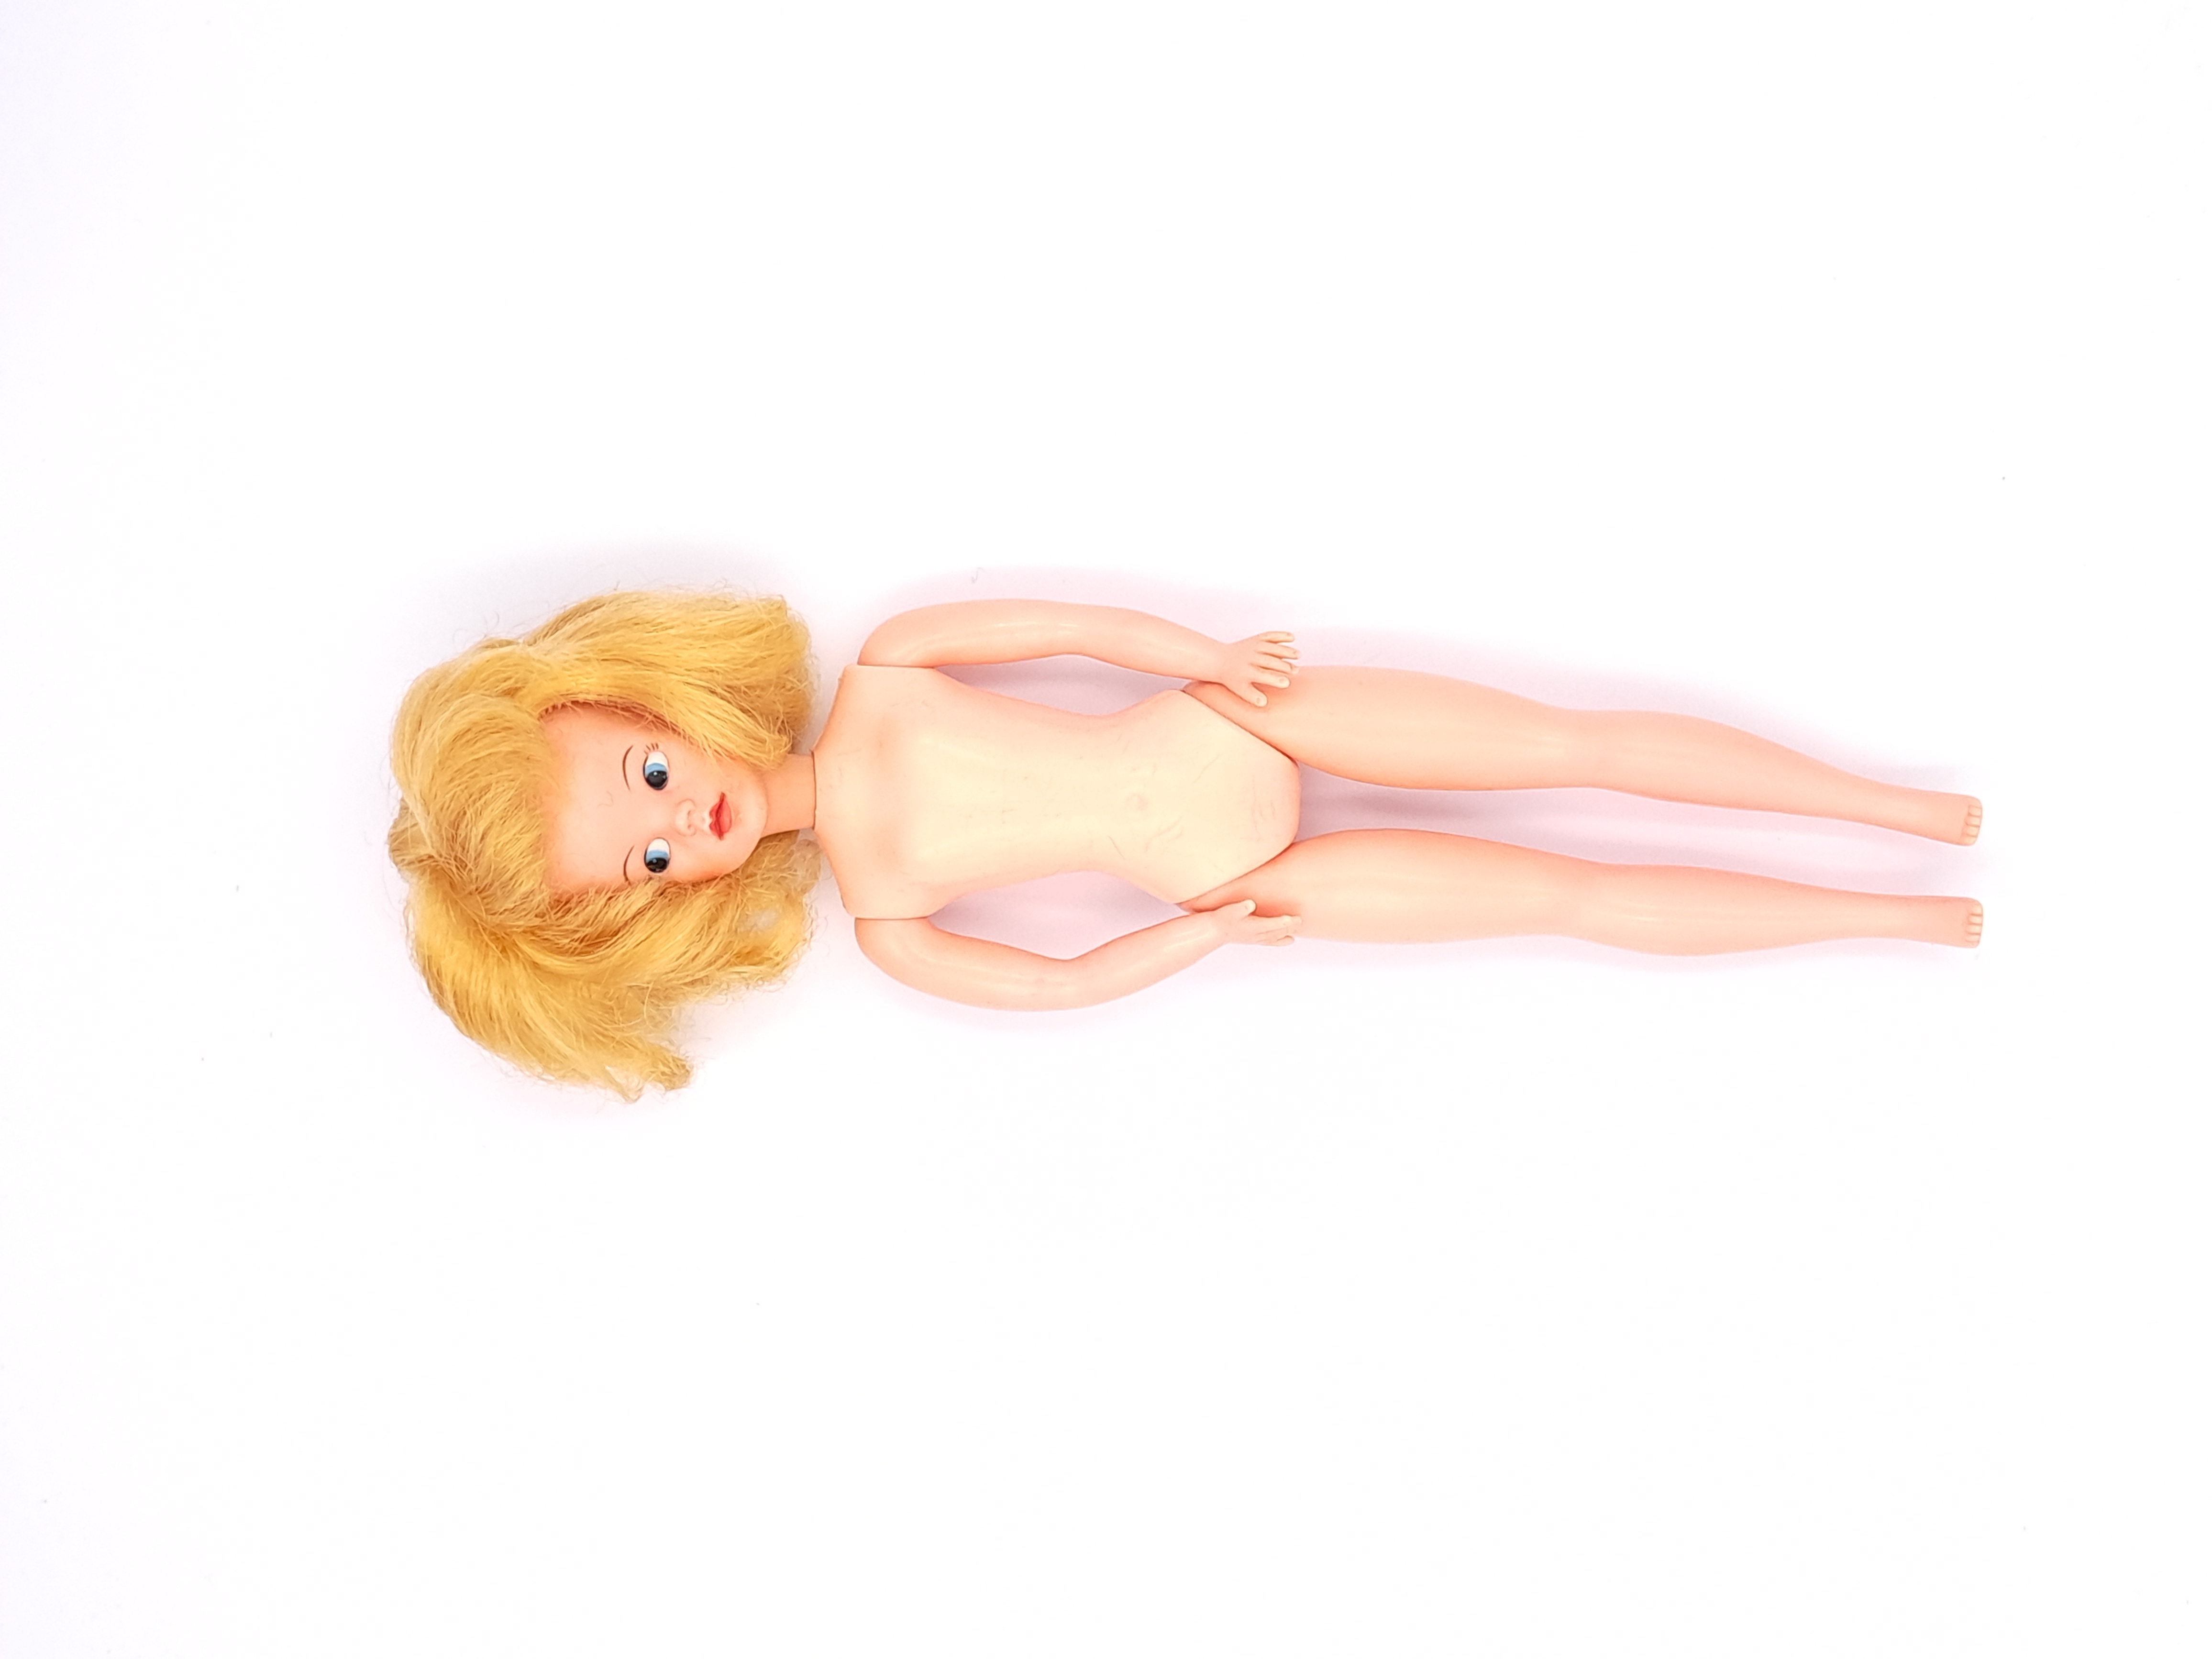 Pedigree mini Sindy Bowling vintage blonde doll, 1966 - Image 3 of 4